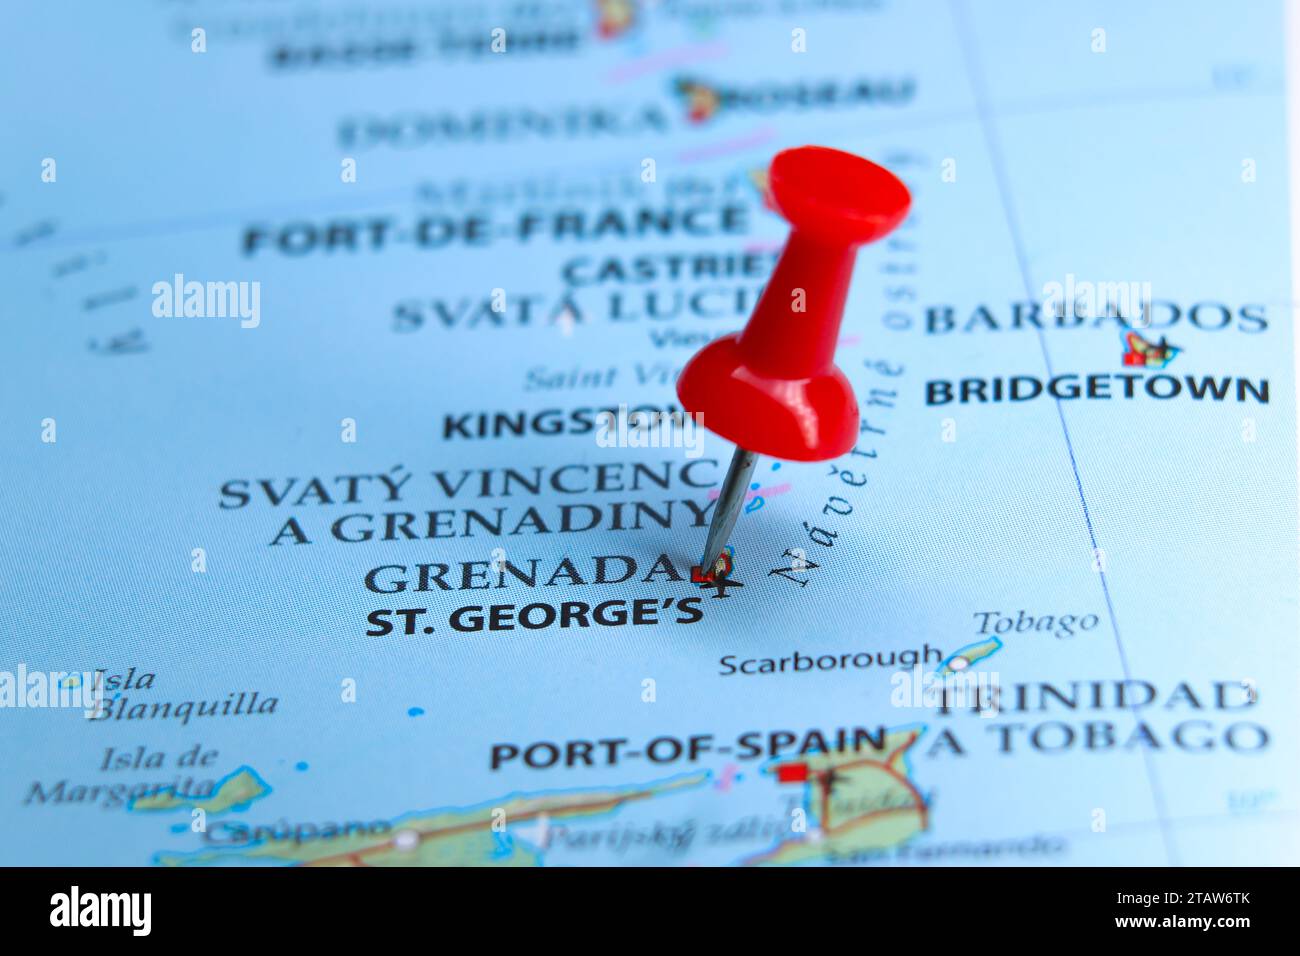 Saint George's, Grenada pin on map Stock Photo